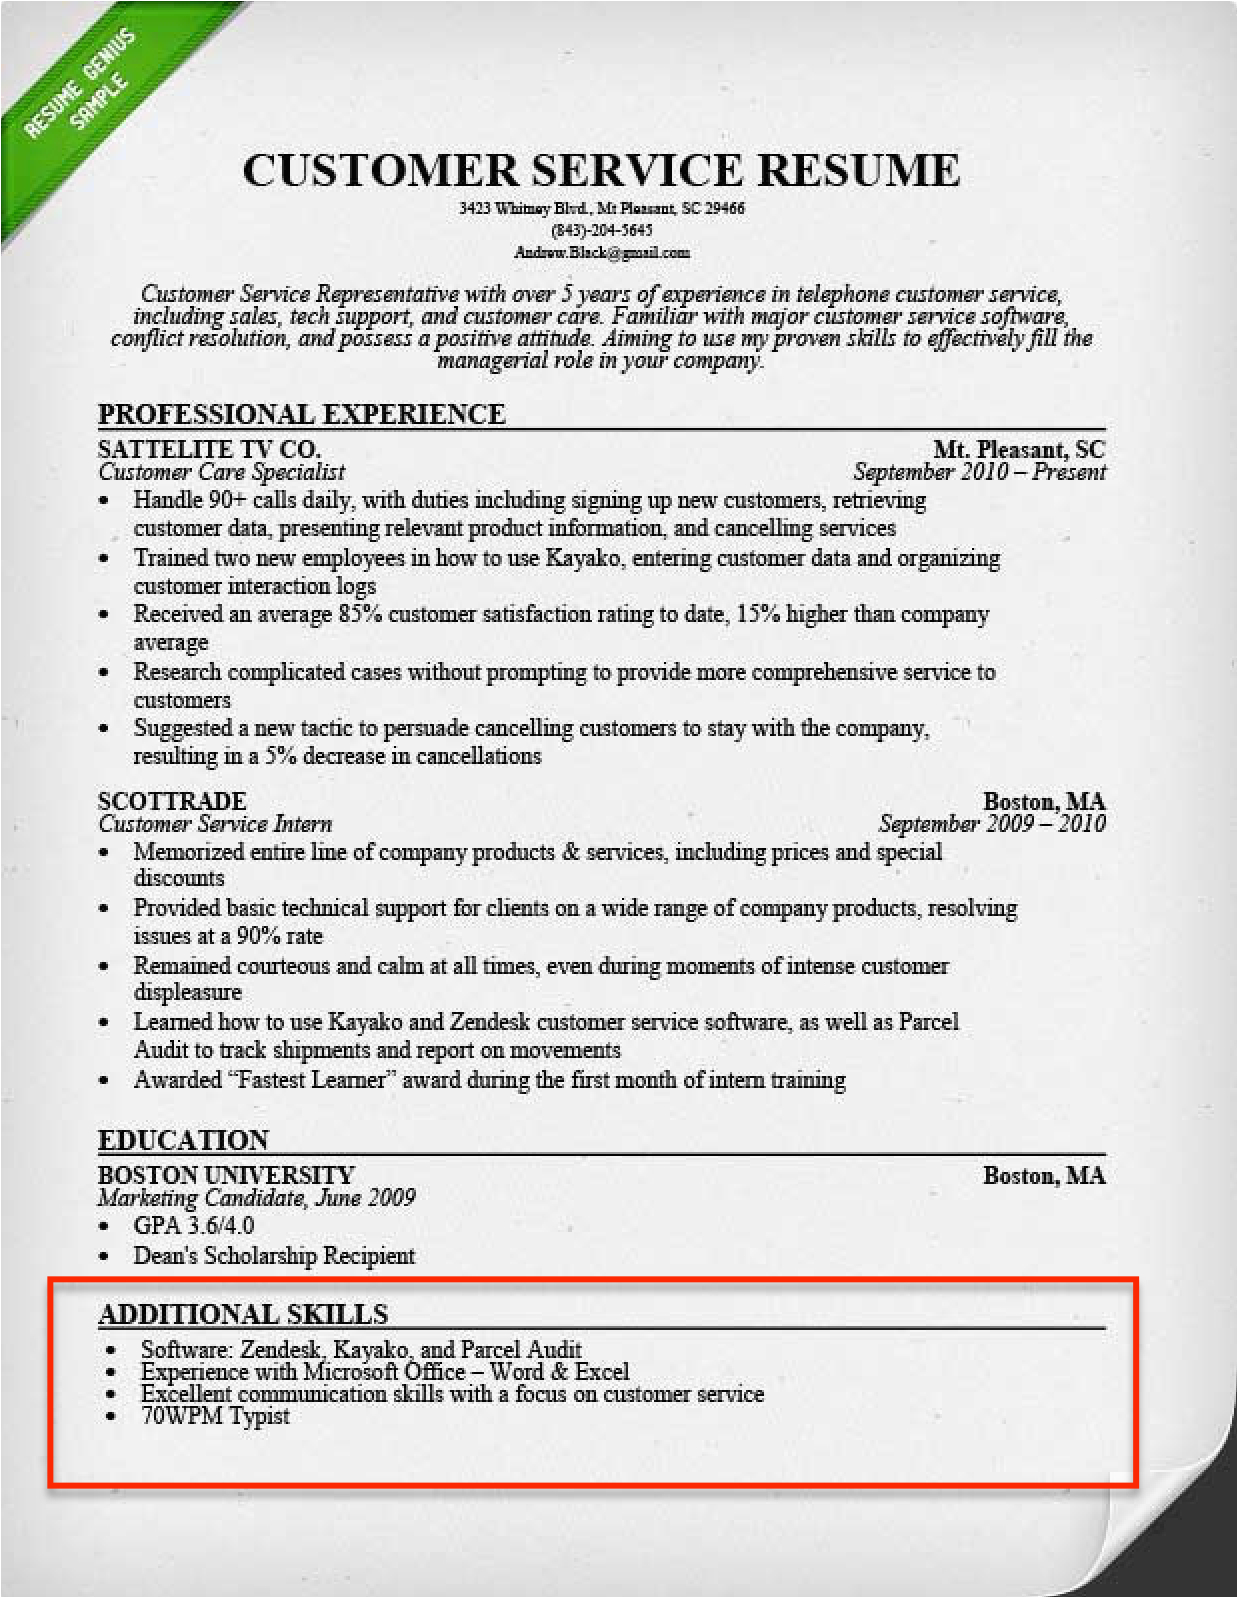 Sample Resume Skills Section Customer Service Resume Skills Section 250 Skills for Your Resume